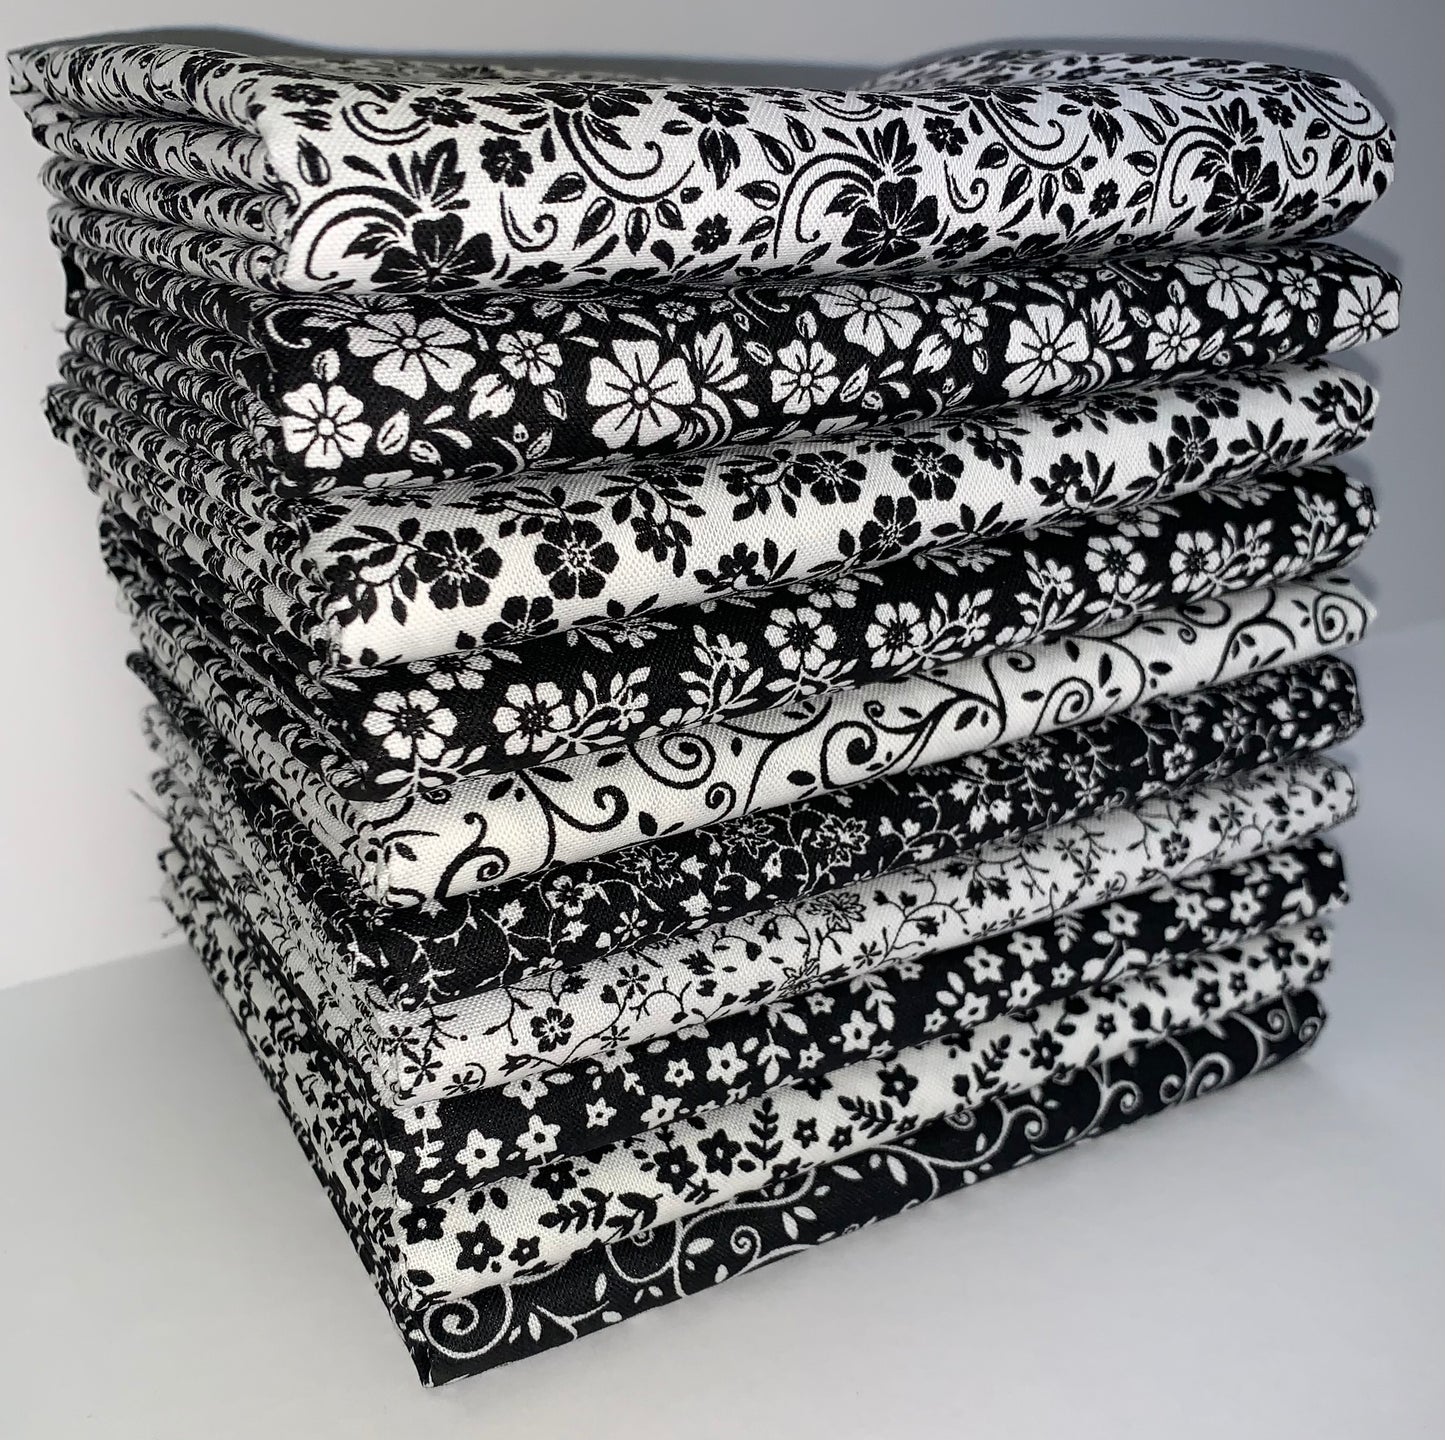 Night & Day (Black & White Prints) Half-yard Bundle - 10 Fabrics, 5 Total Yards